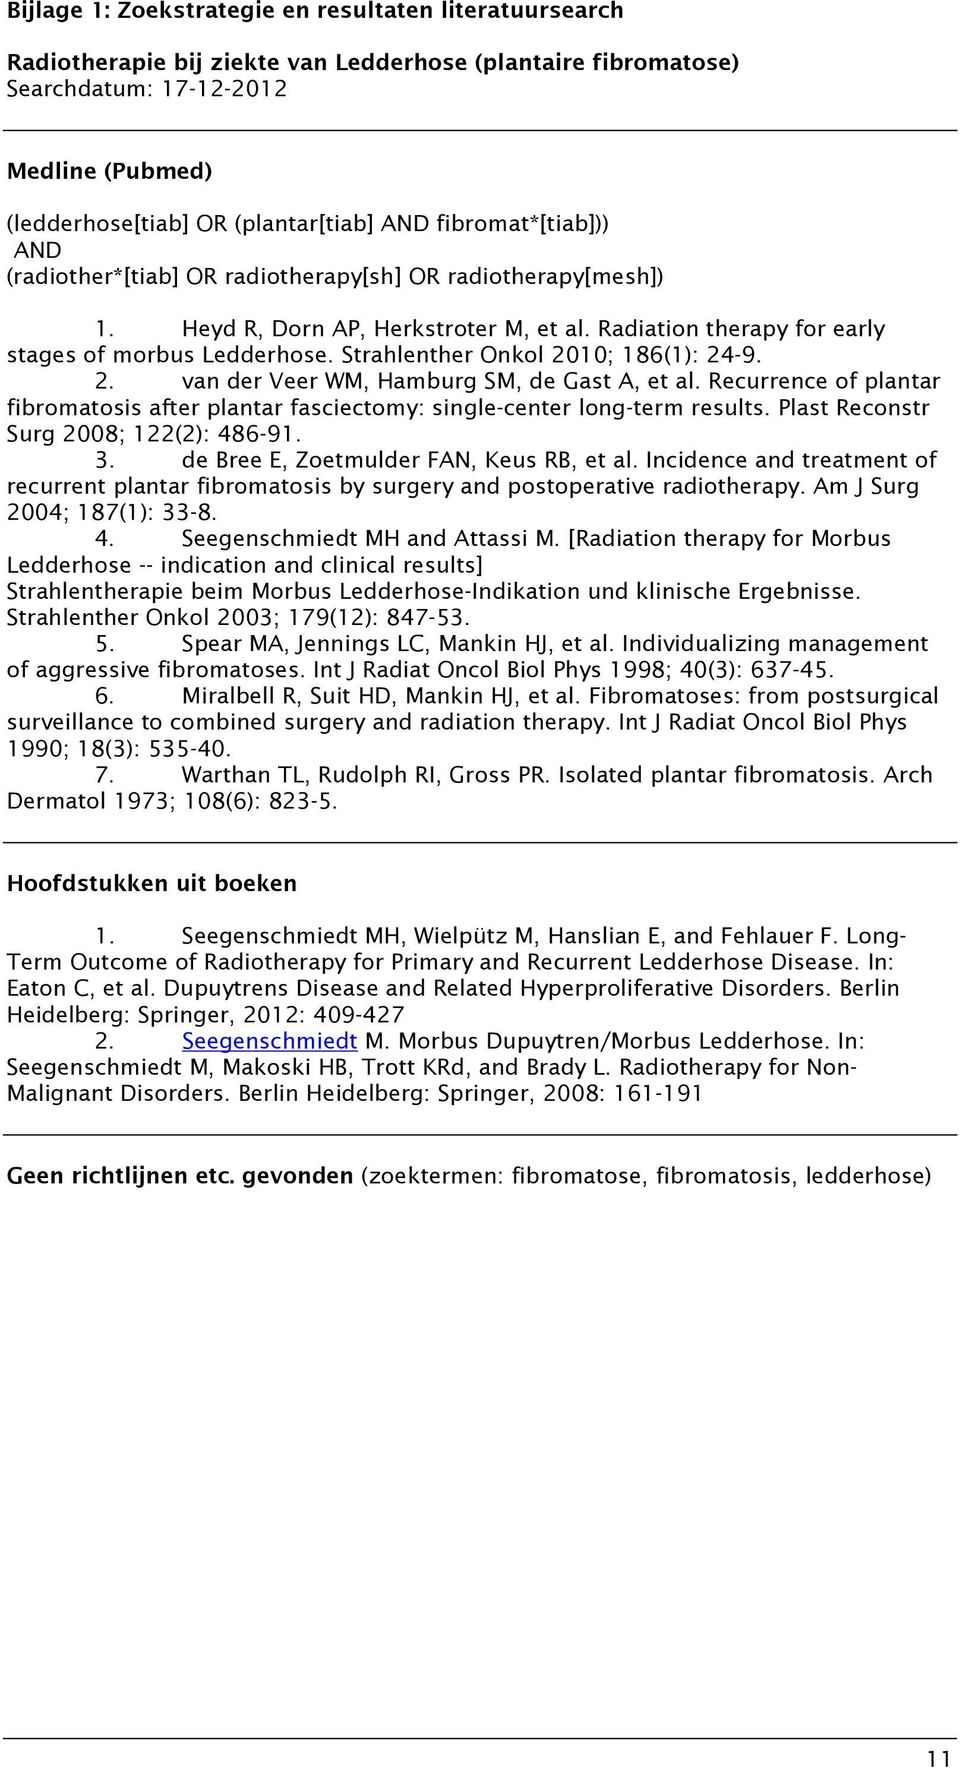 Strahlenther Onkol 2010; 186(1): 24-9. 2. van der Veer WM, Hamburg SM, de Gast A, et al. Recurrence of plantar fibromatosis after plantar fasciectomy: single-center long-term results.